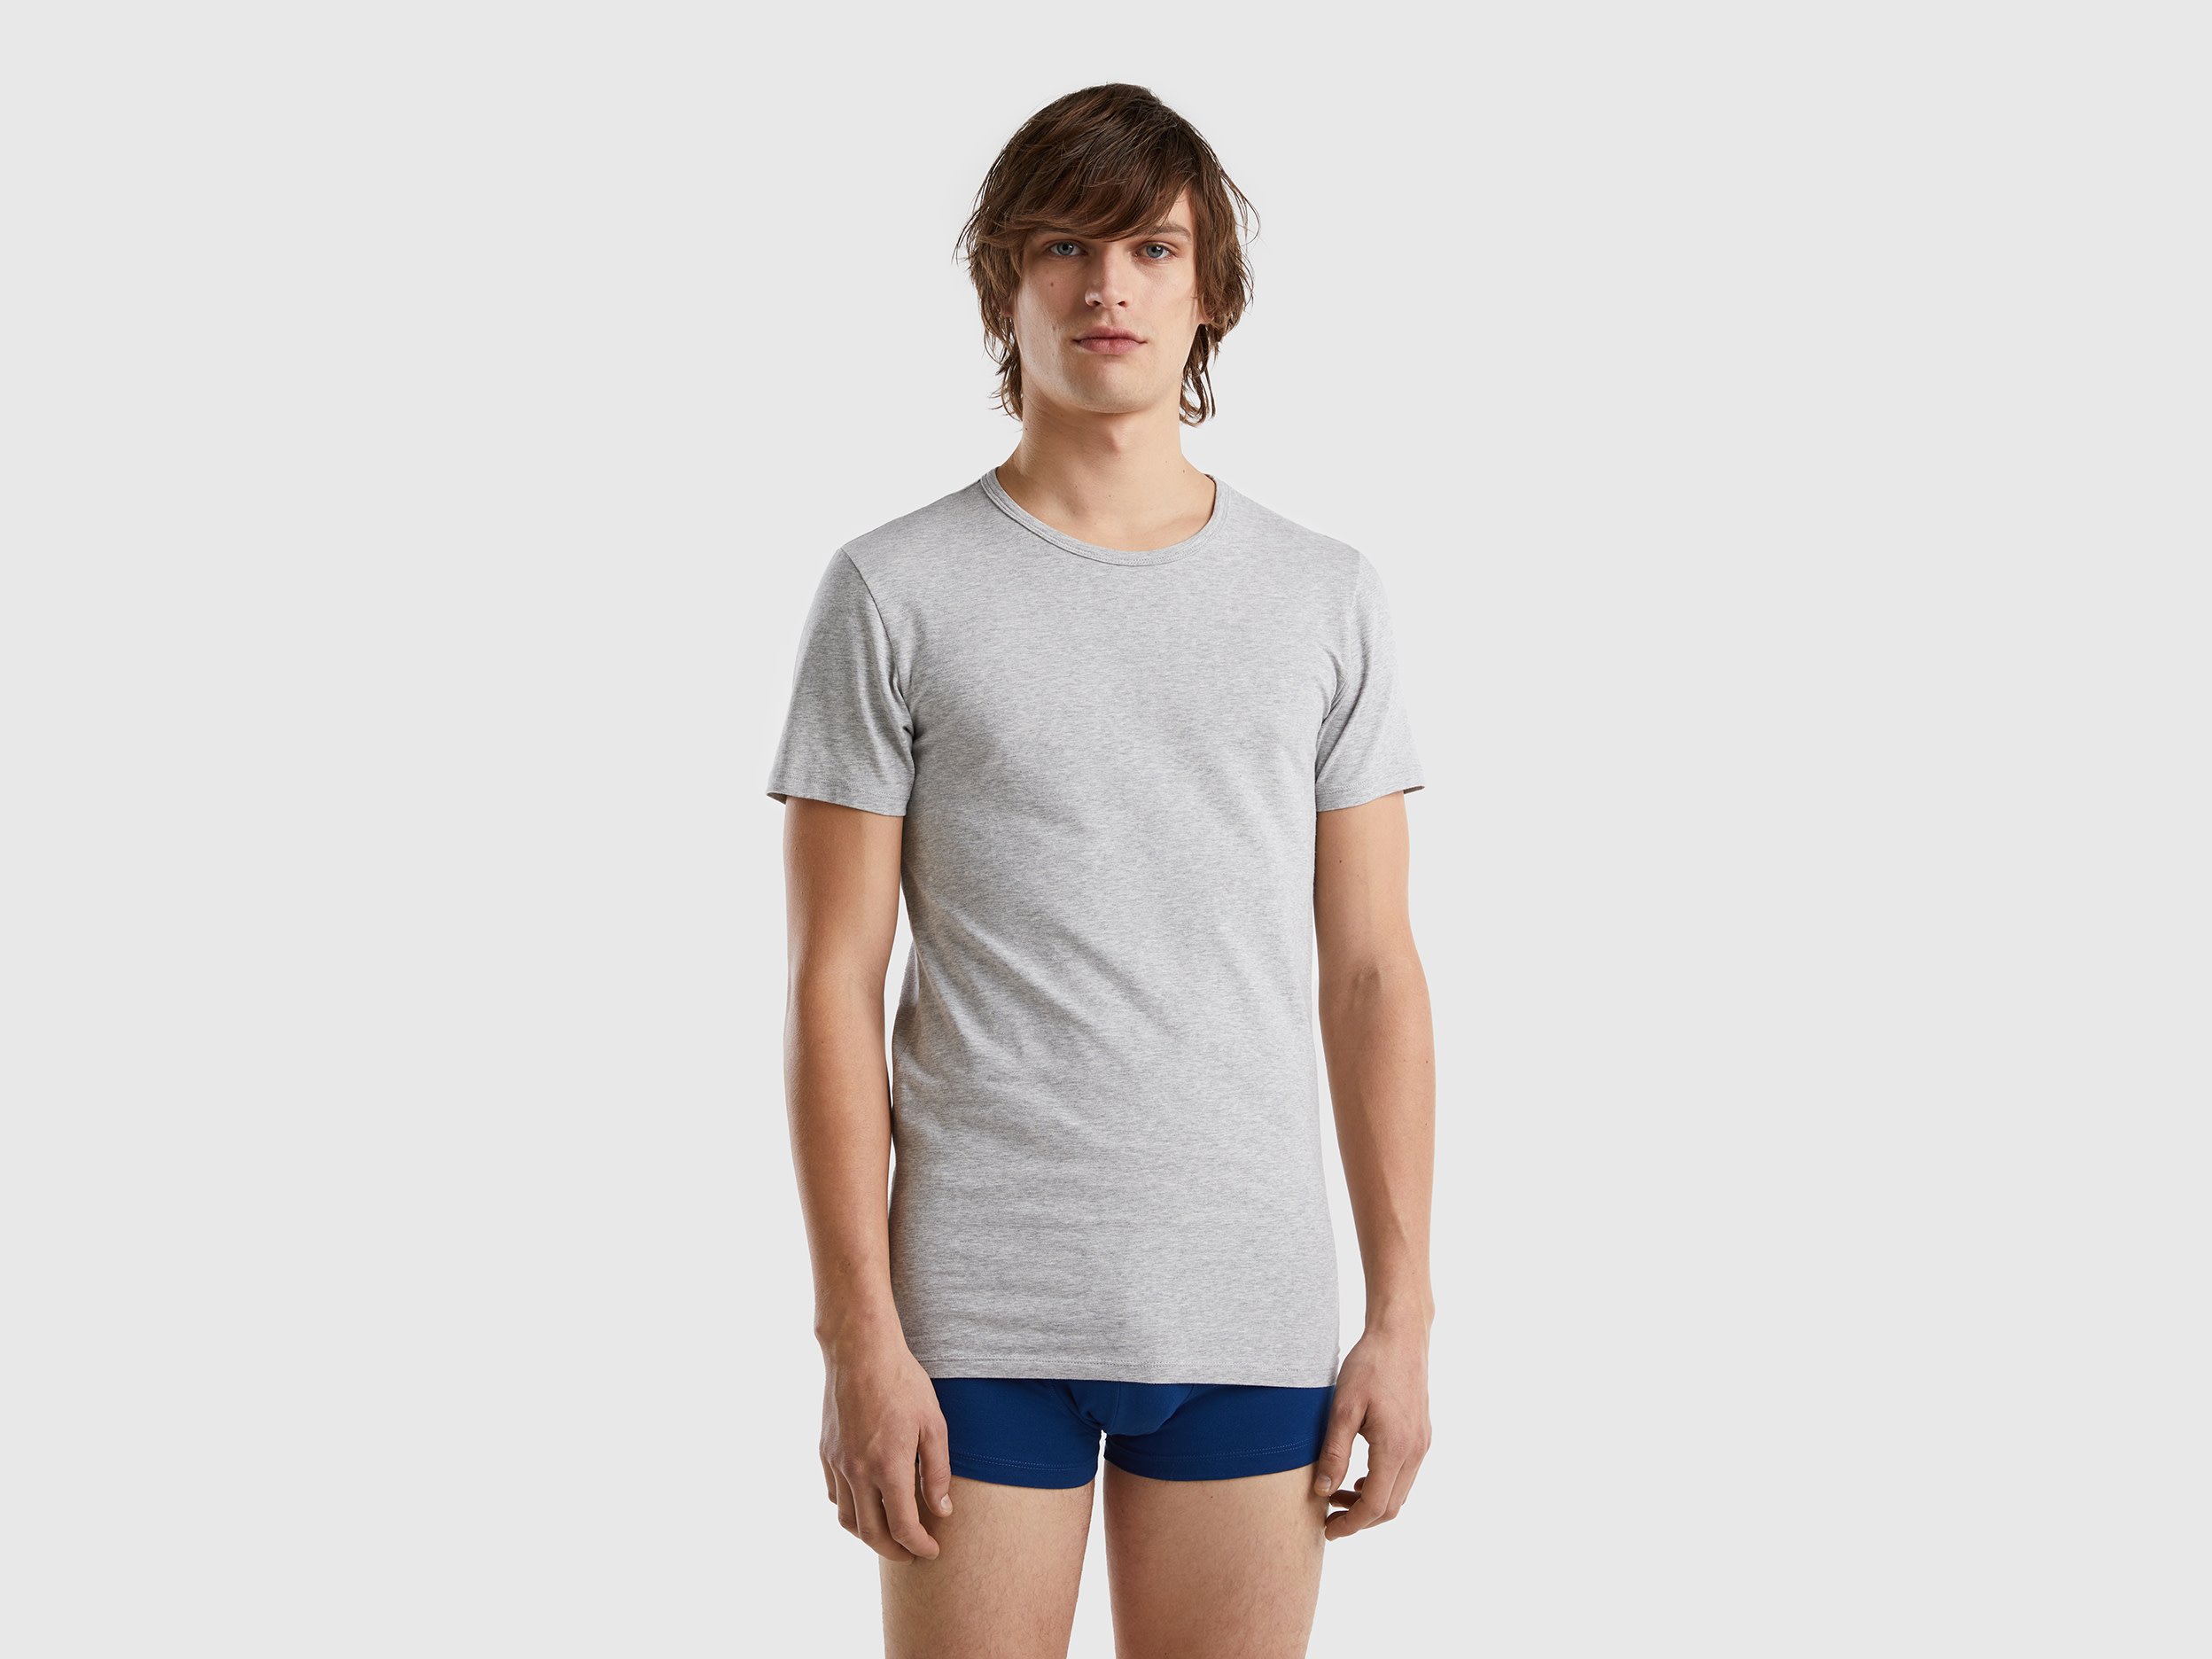 Image of Benetton, Organic Stretch Cotton T-shirt, size M, Light Gray, Men